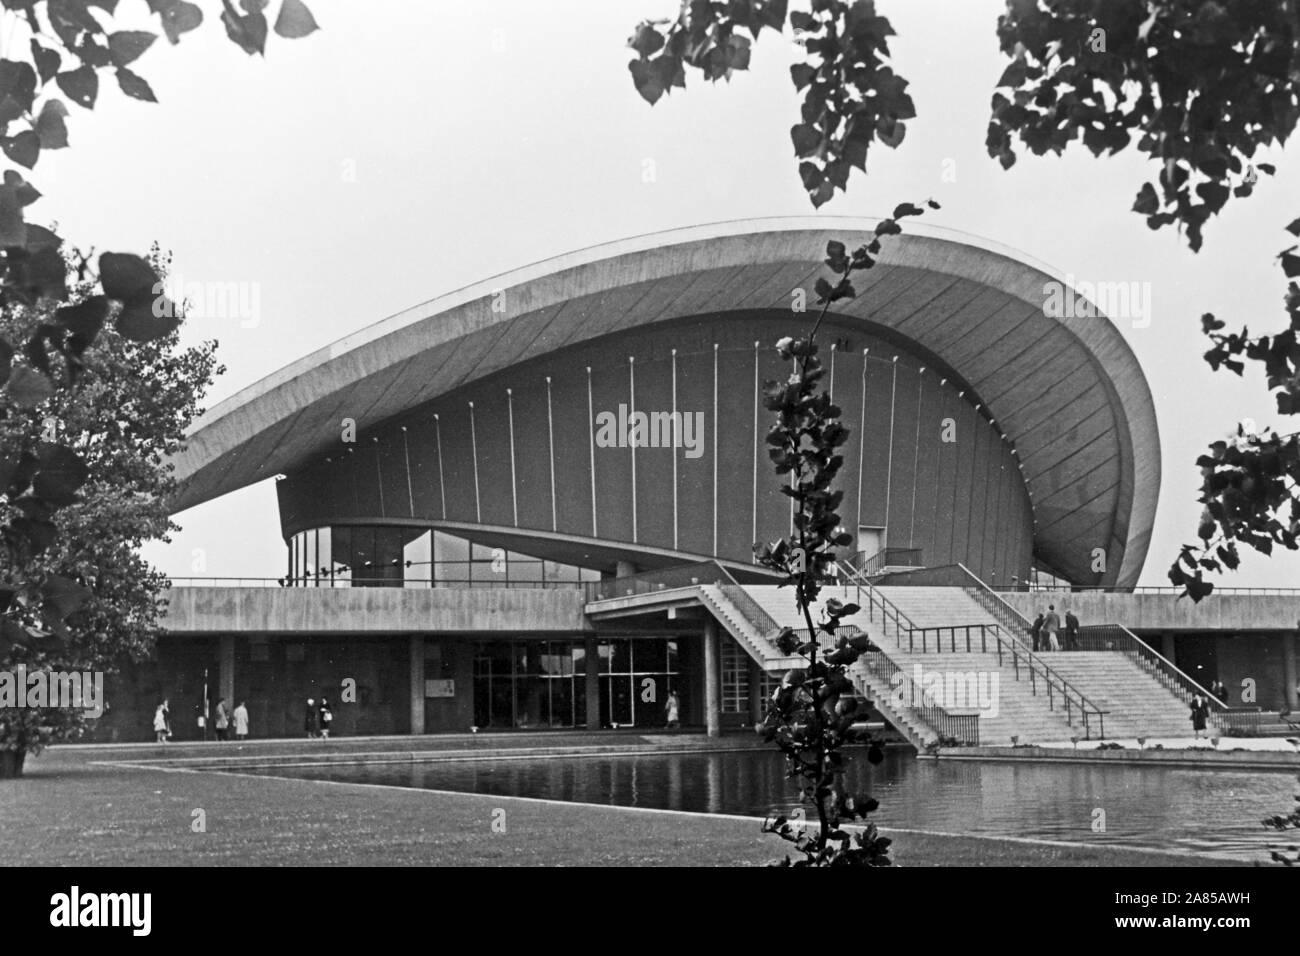 Die Kongresshalle an der John Foster Dulles Allee im Ortsteil Tiergarten di Berlino, Deutschland 1961. Congresso e la sala eventi in zona Tiergarten di Berlino in Germania 1961. Foto Stock